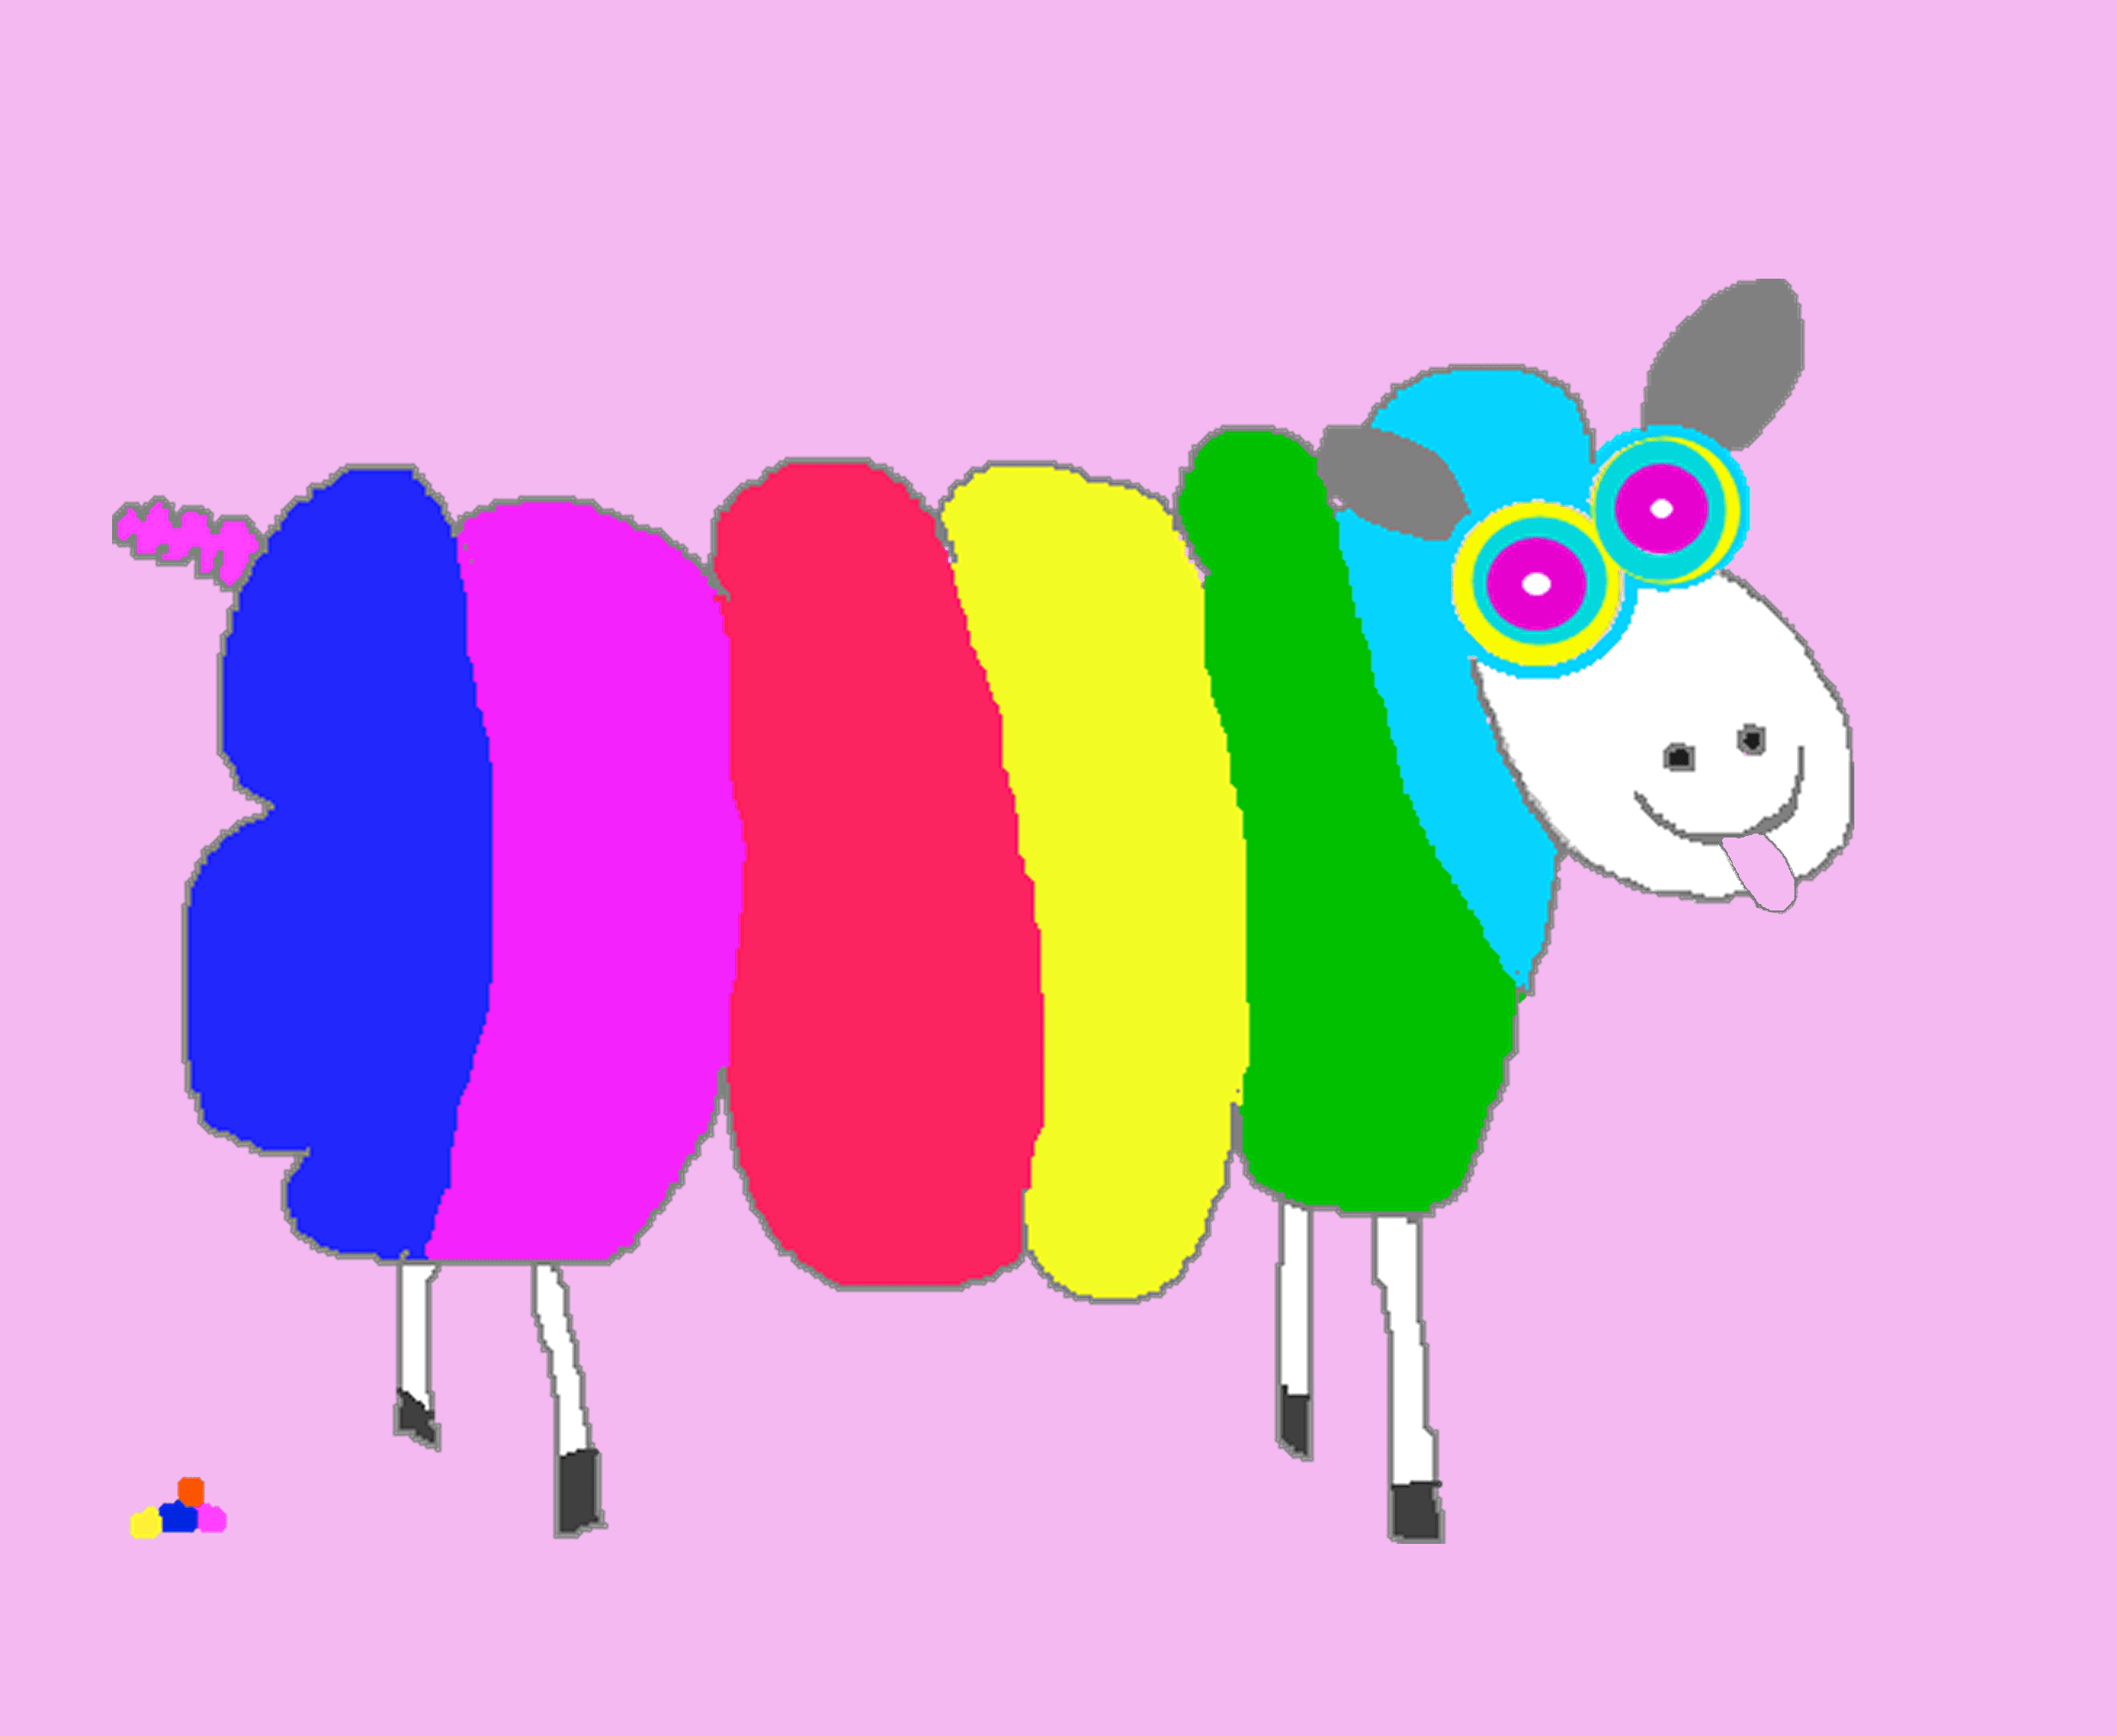 Sheep 4. Rude sheep, stoned